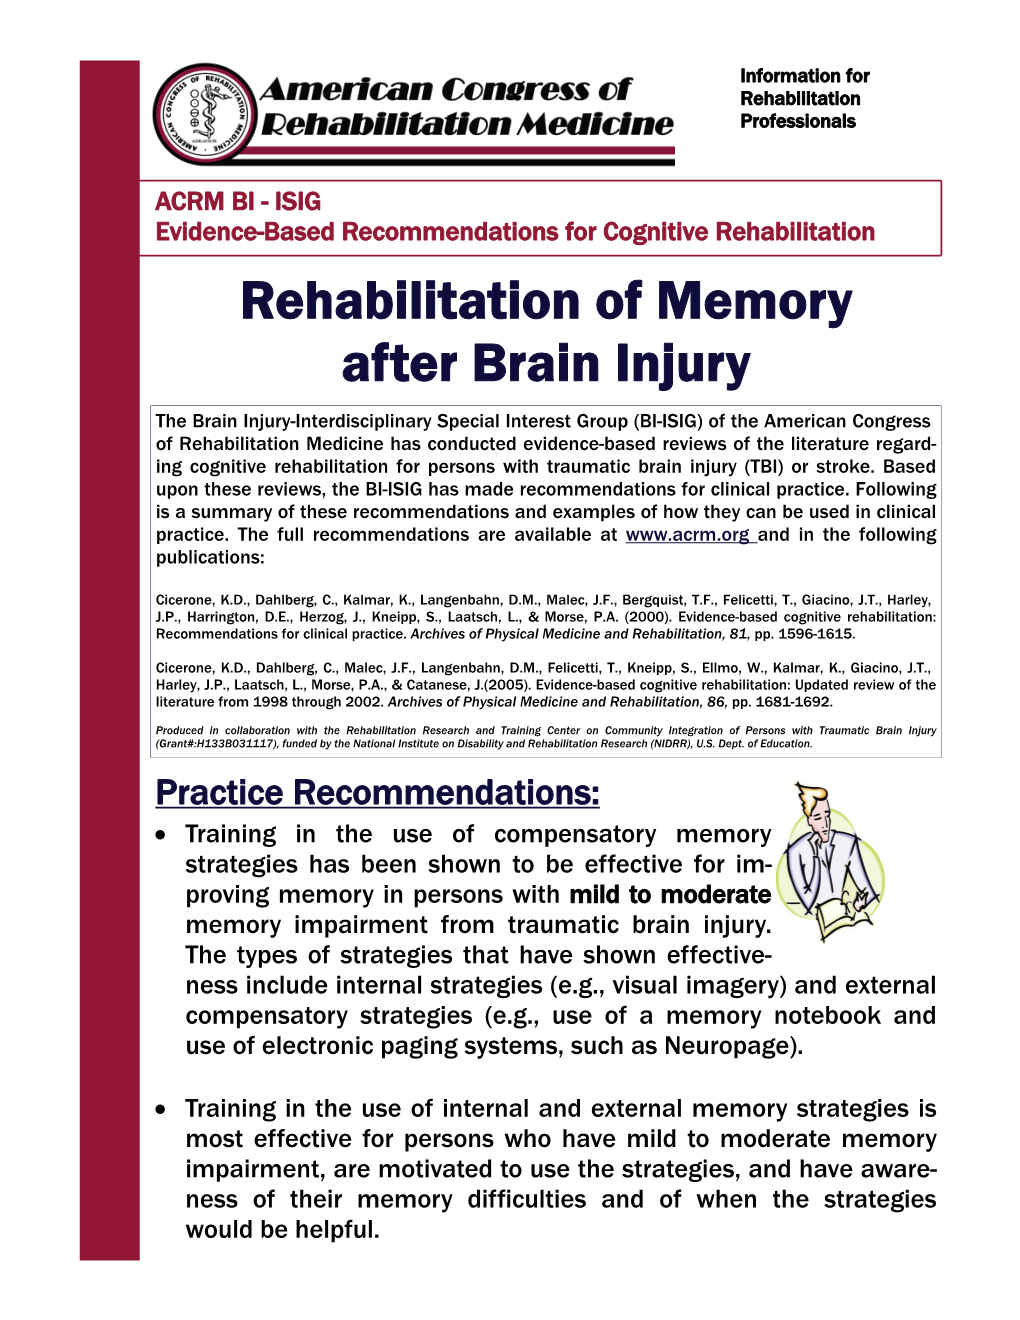 Rehabilitation of Memory After Brain Injury